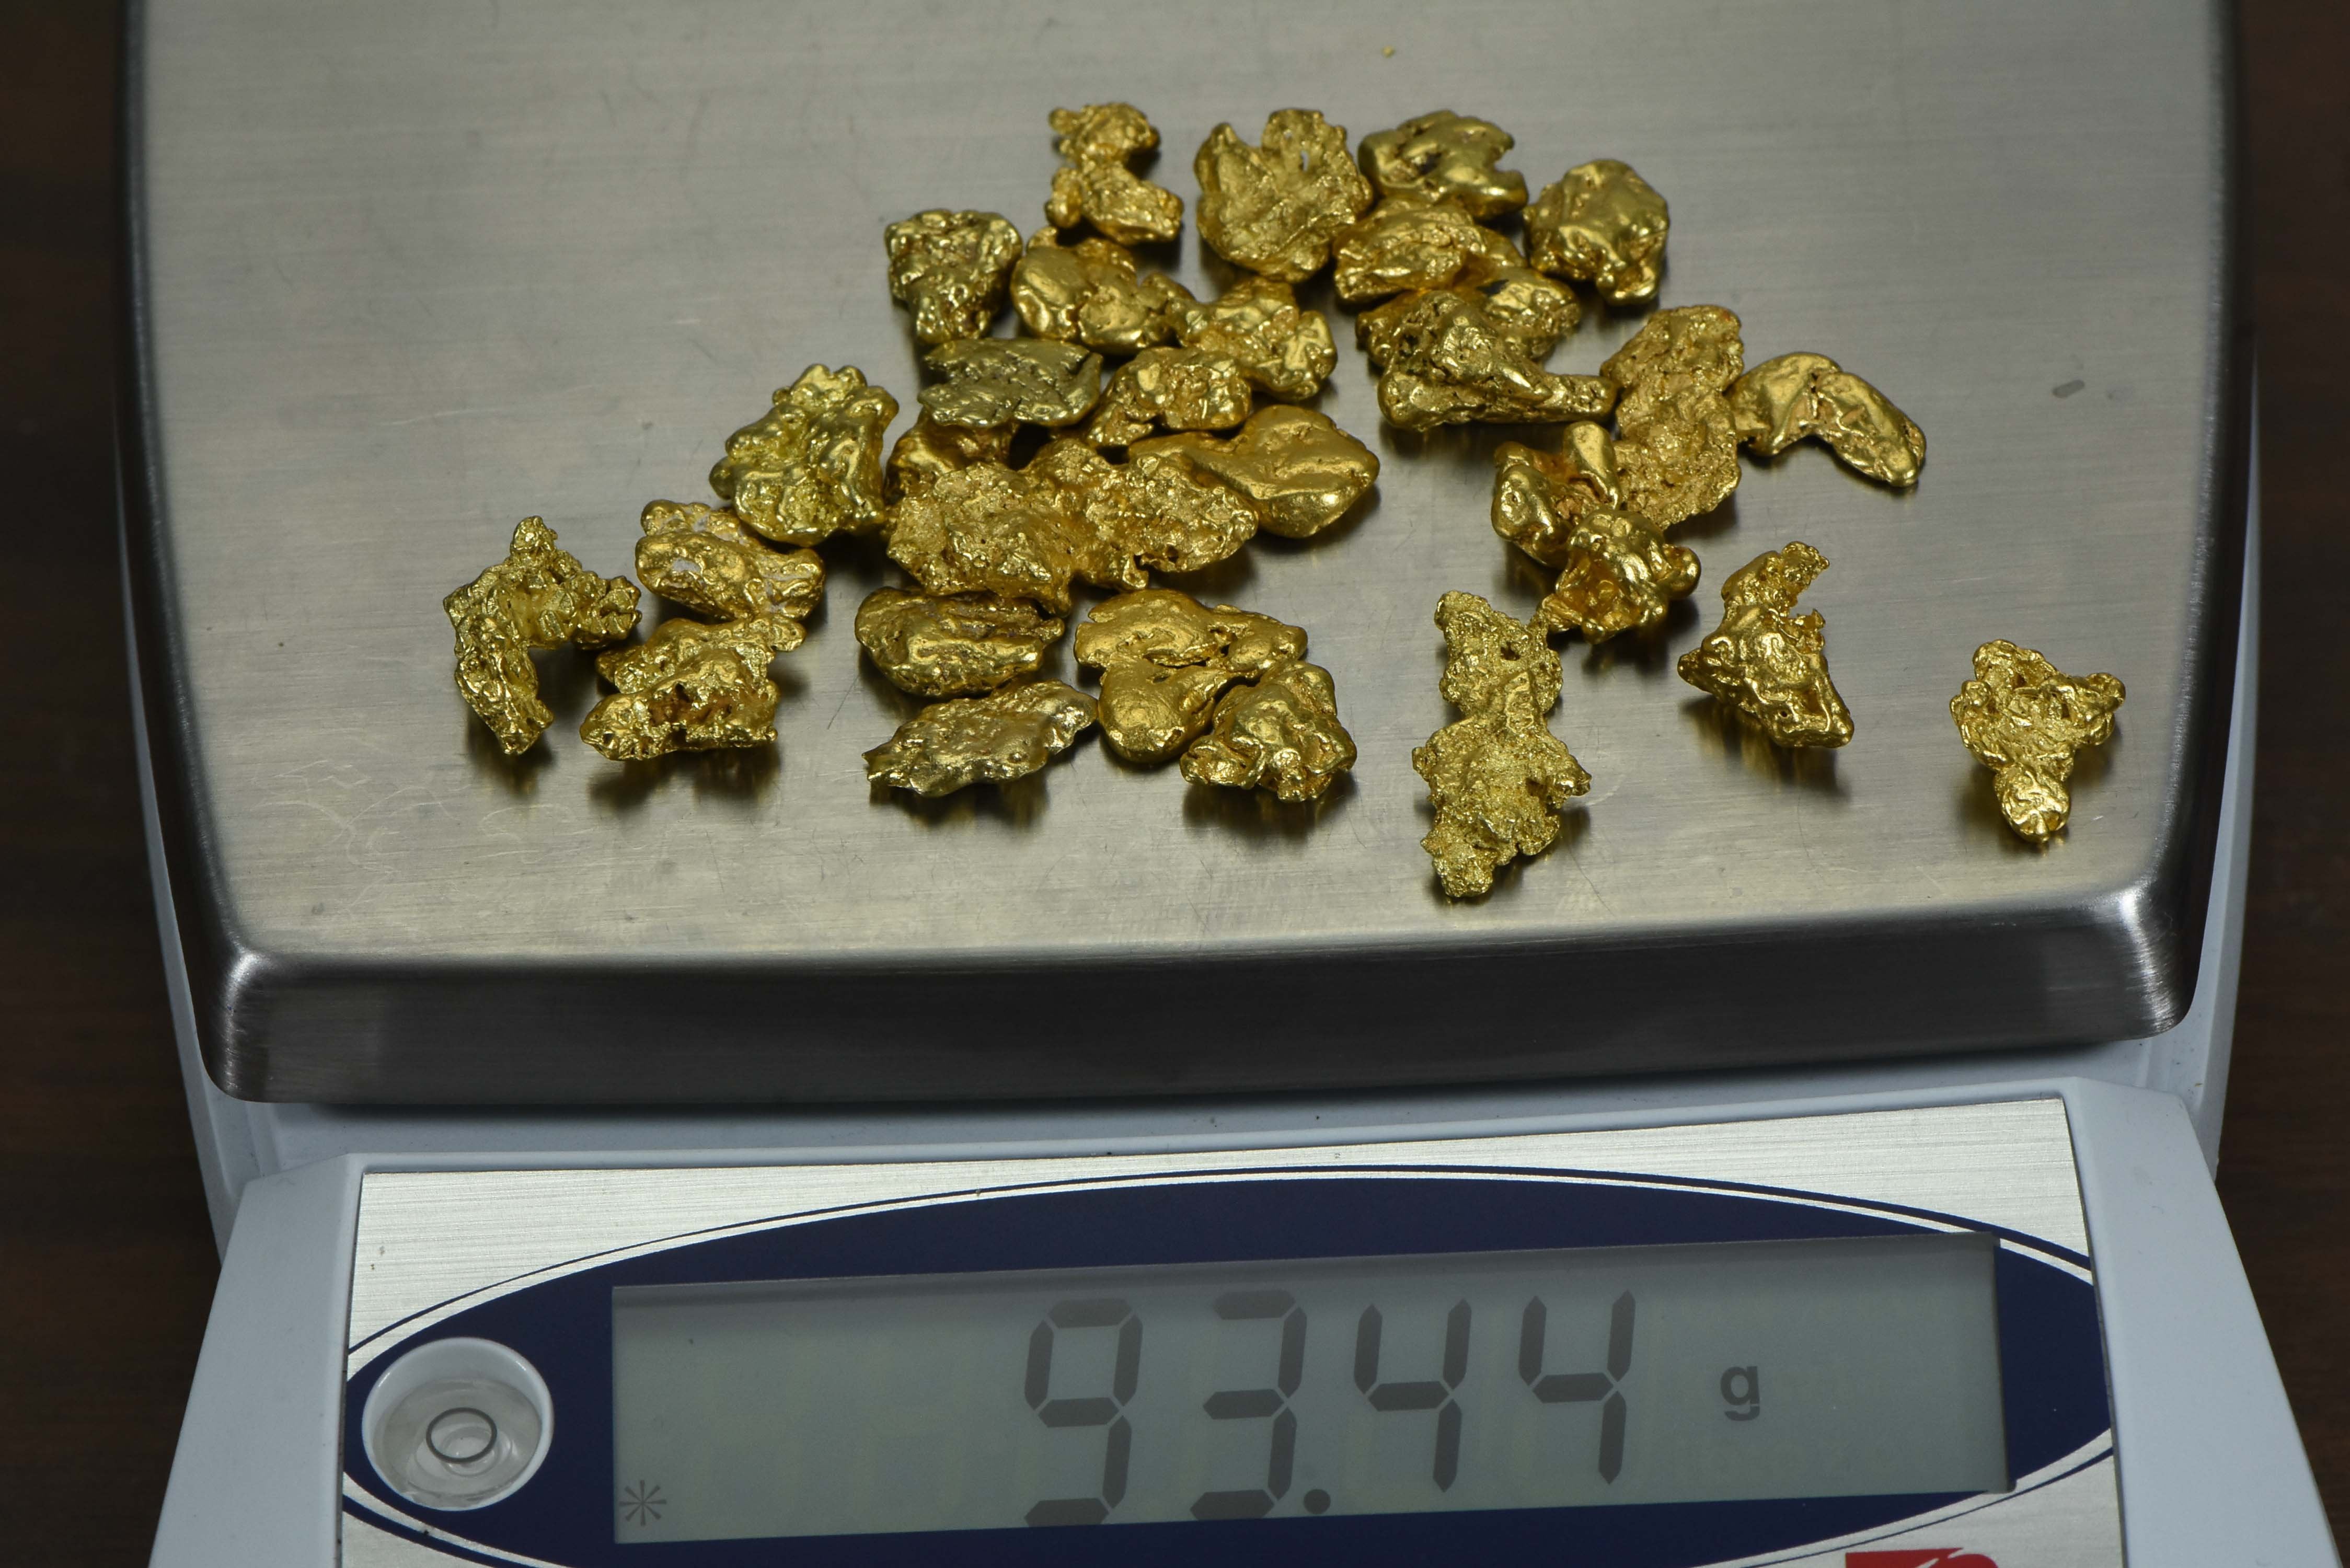 Alaskan Bc Natural Gold Nugget 93.30 Gram Lot Of 2 To 5 Gram Nuggets Genuine 3-Troy Oz. Alaska